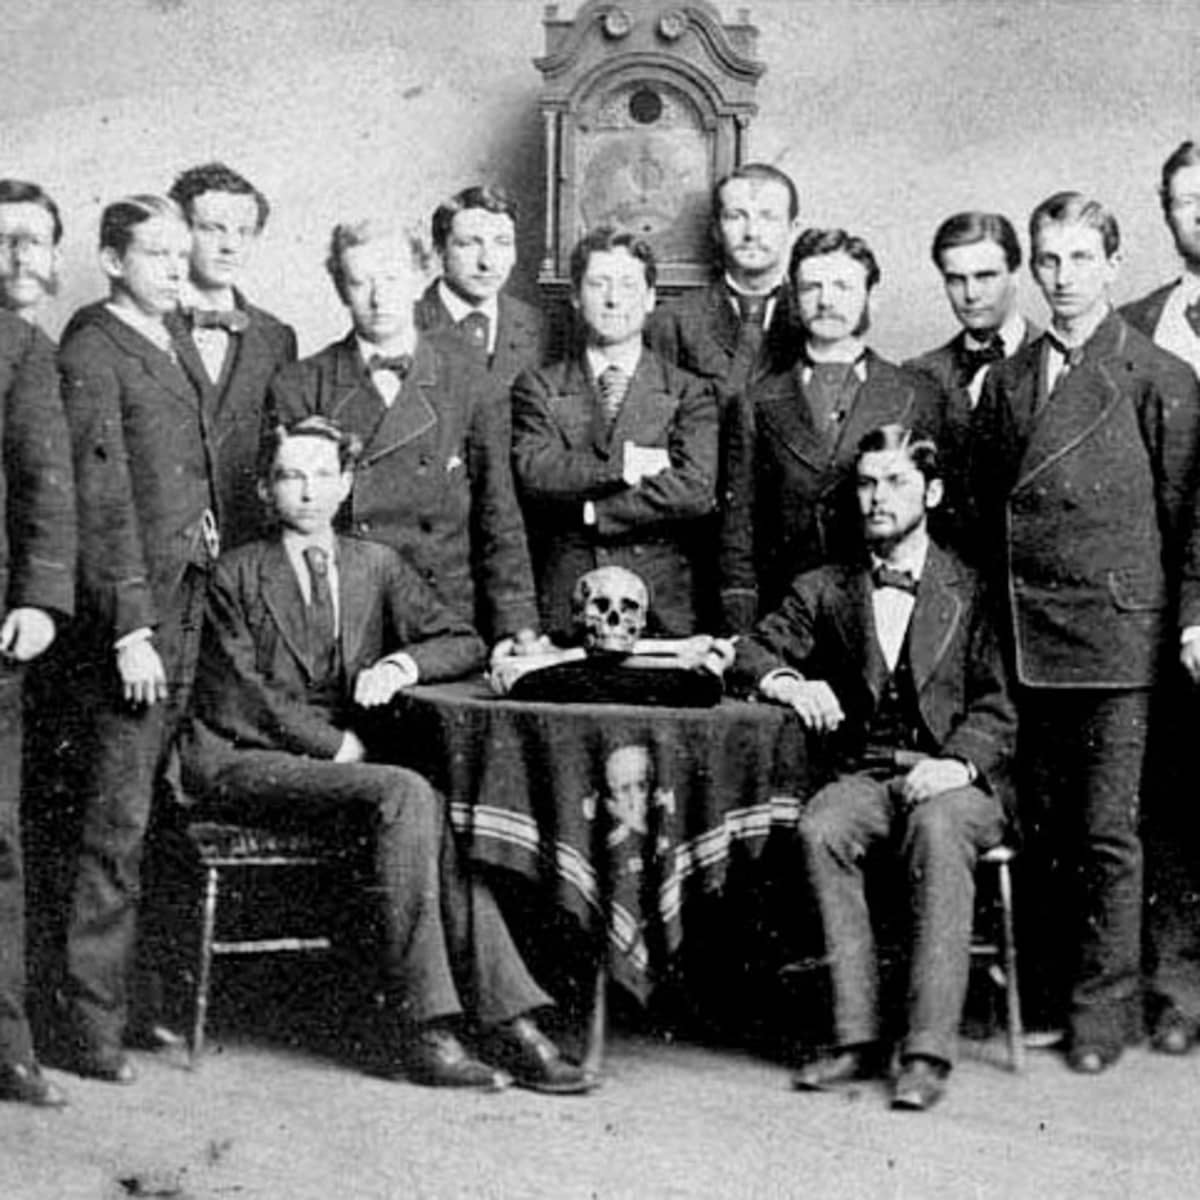 Skull and Bones, 1884, 1887, 1888, 1900, 1901, 1904 - Yale